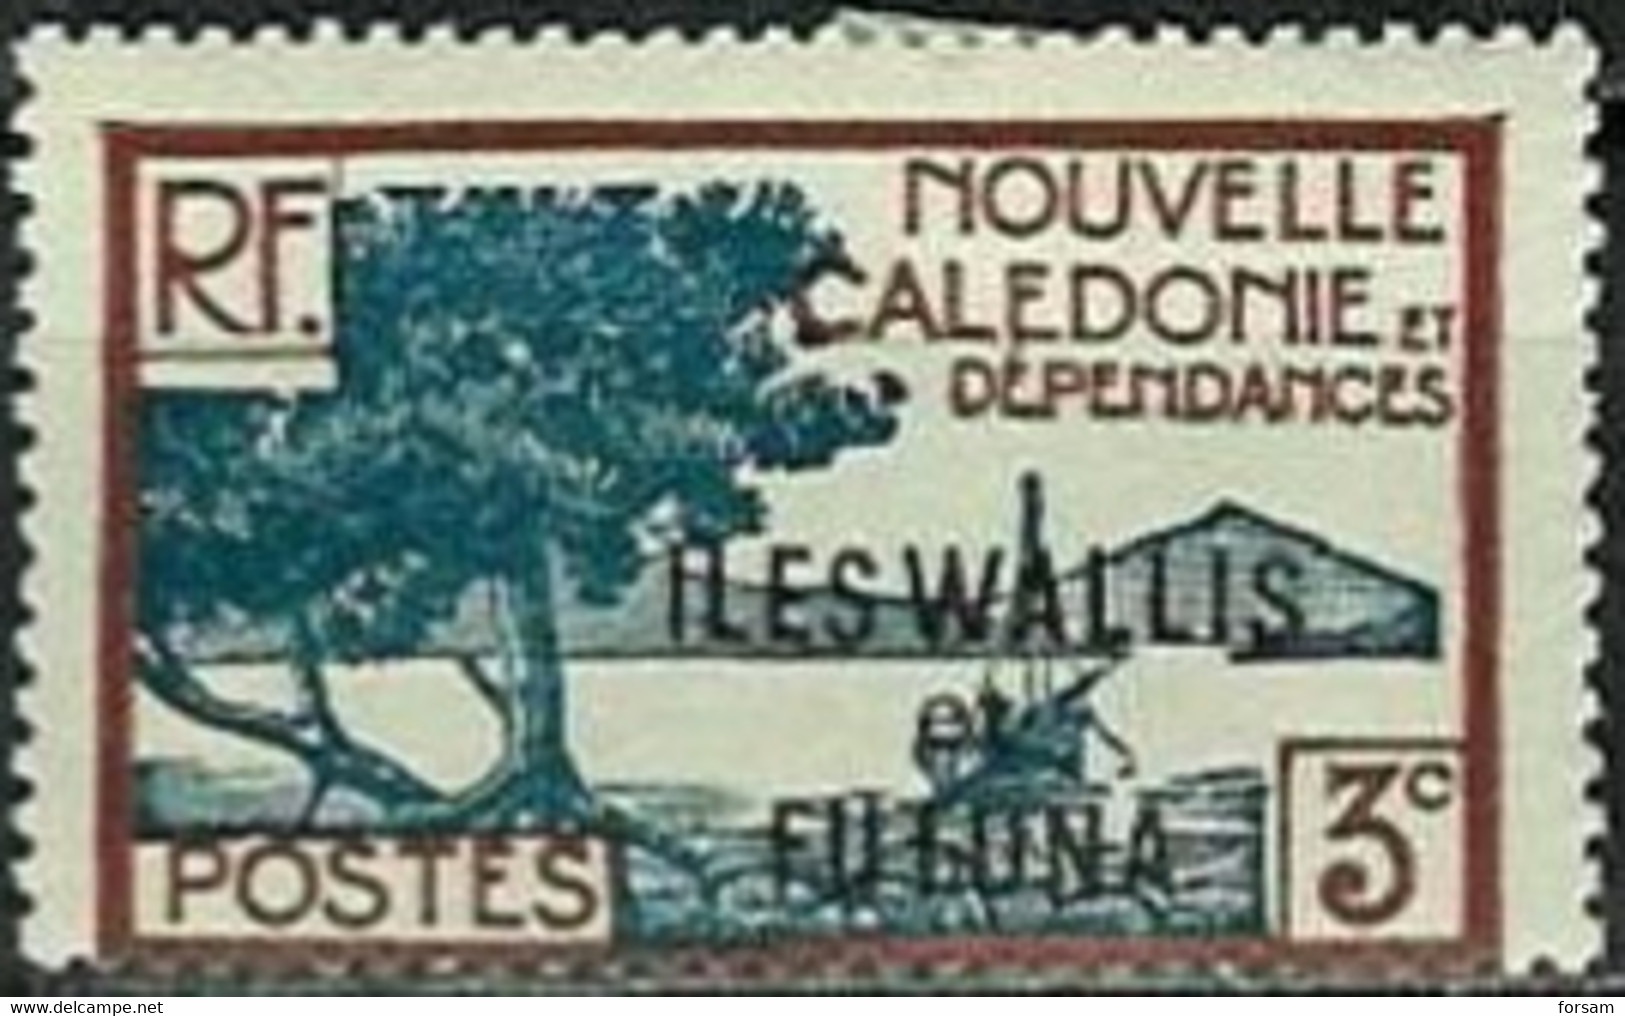 WALLIS & FUTUNA..1939..Michel# 87...MLH. - Unused Stamps